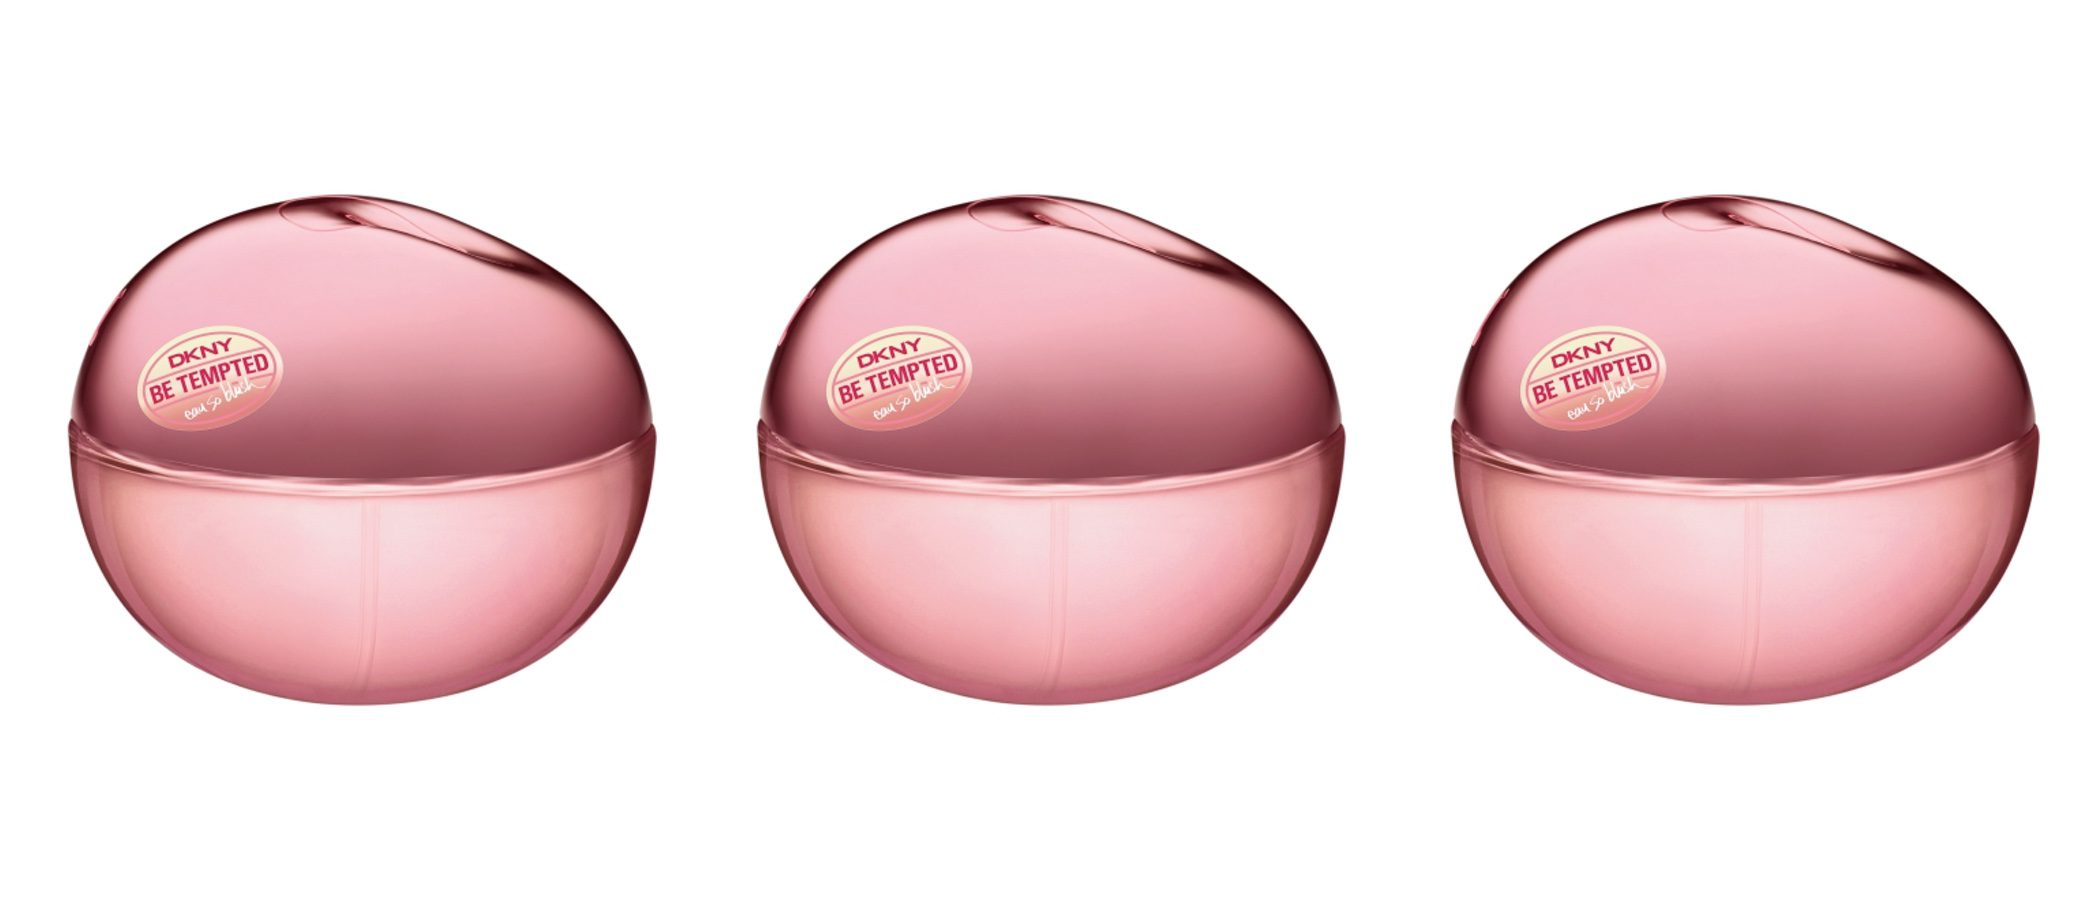 'DKNY Be Tempted Eau So Blush' el nuevo perfume de DKNY